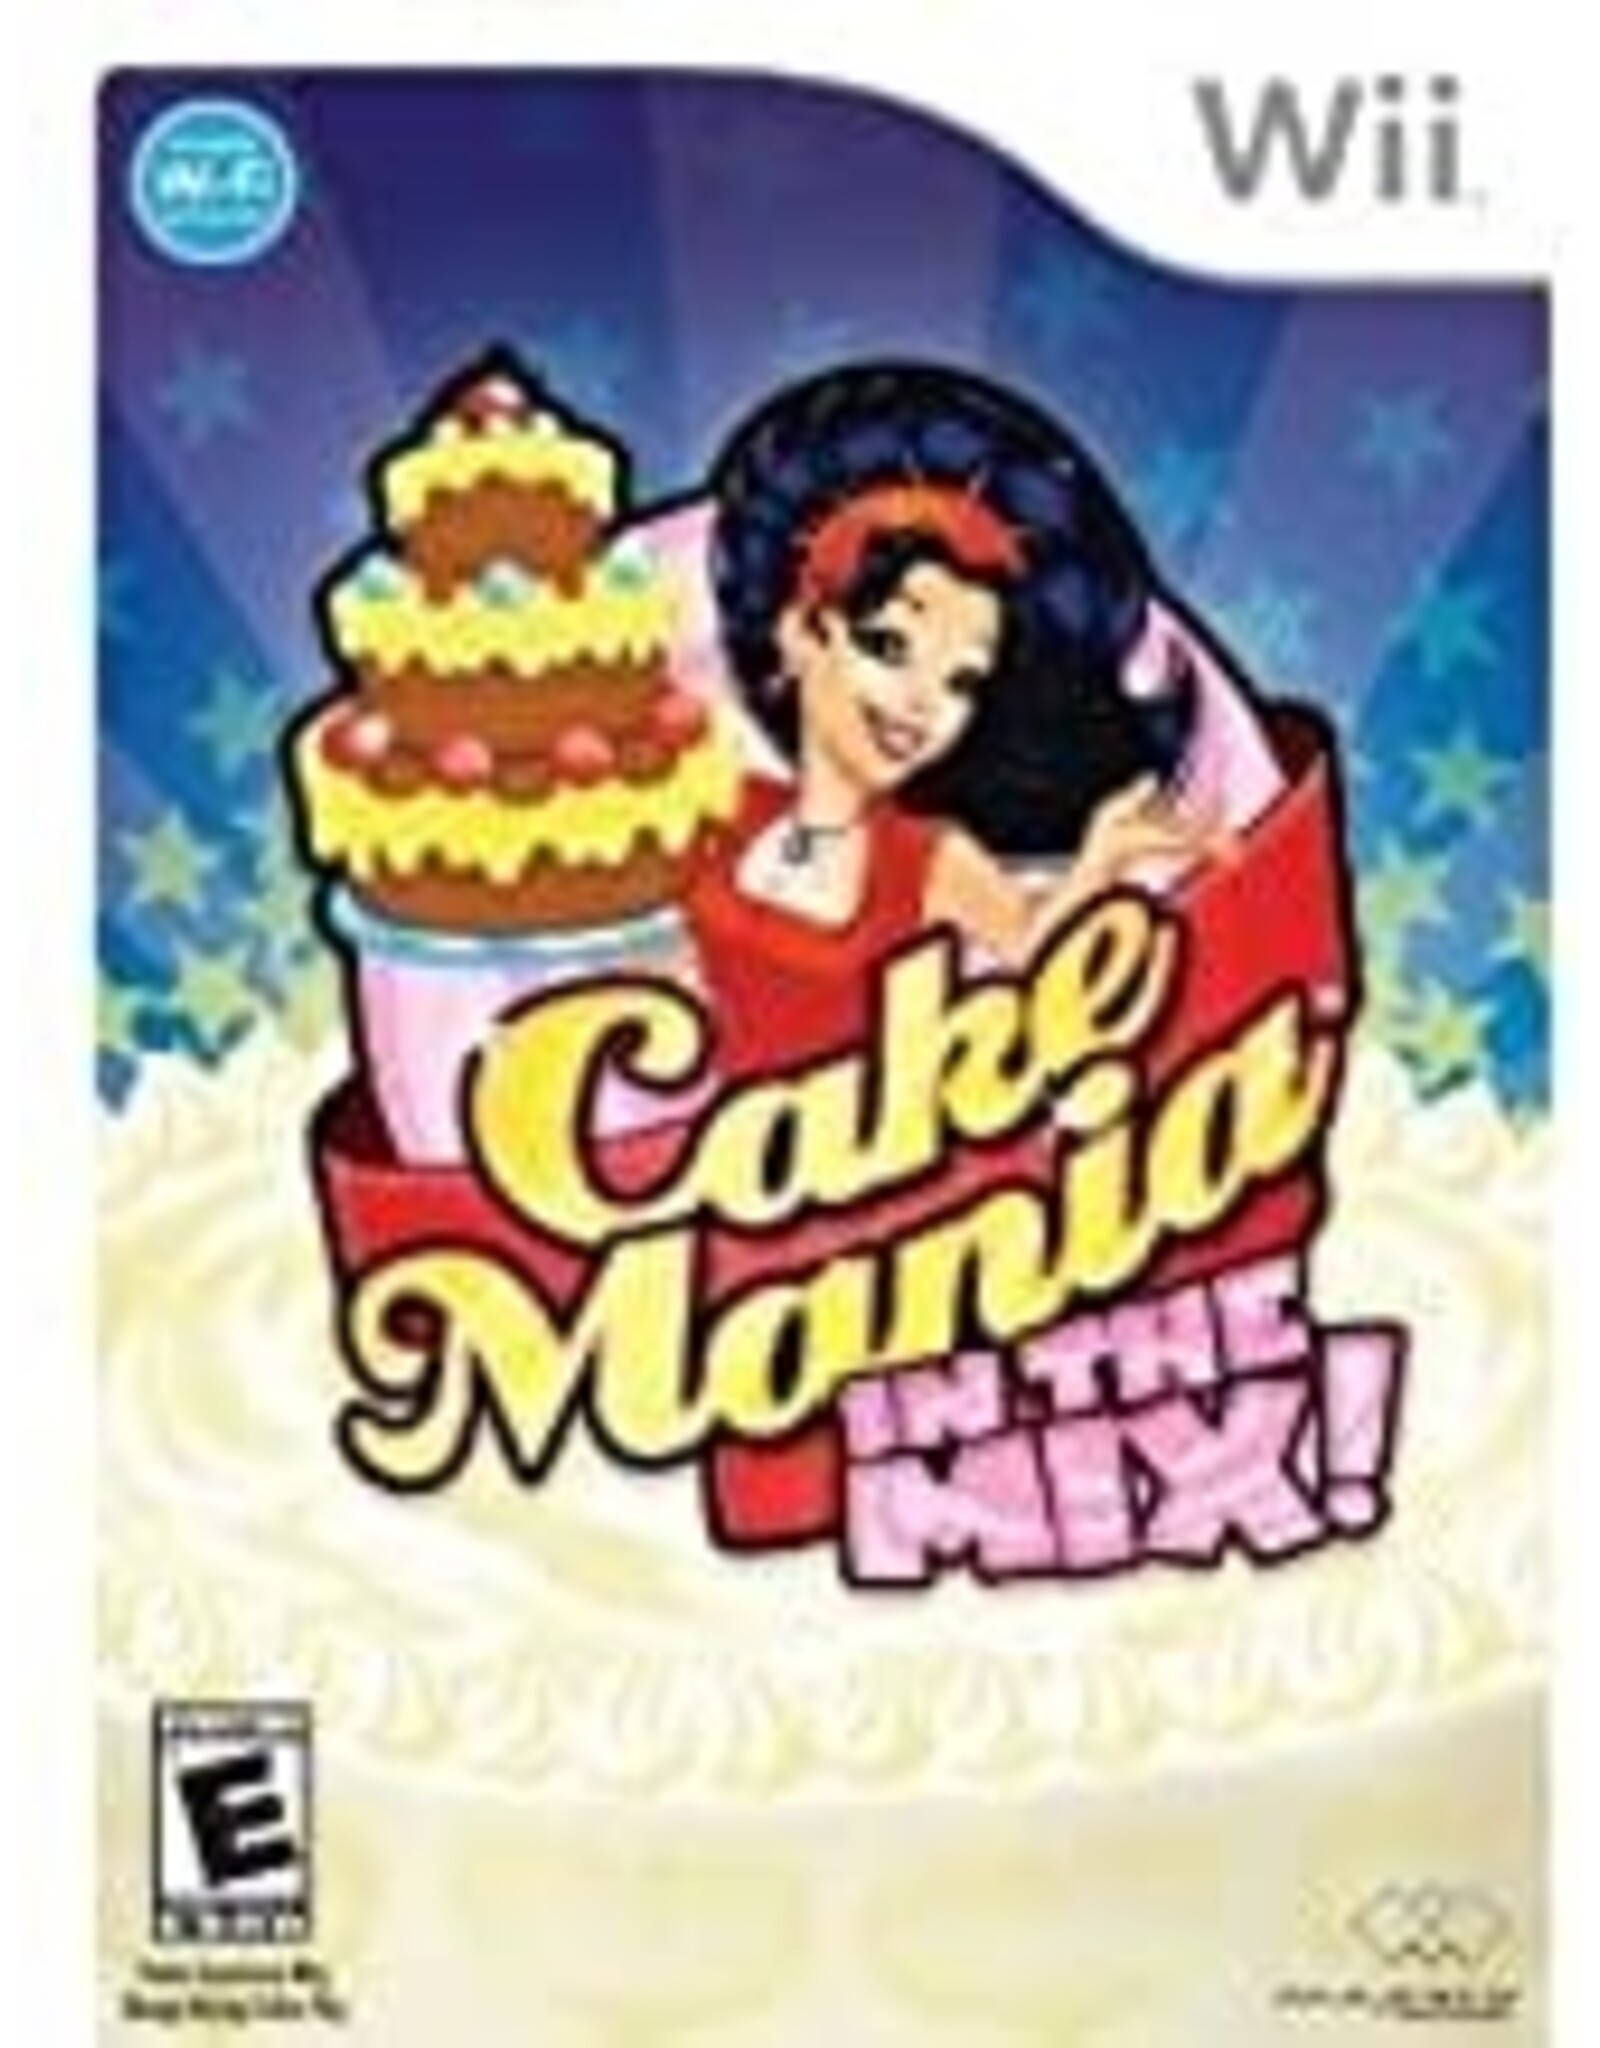 Wii Cake Mania In The Mix (CiB)